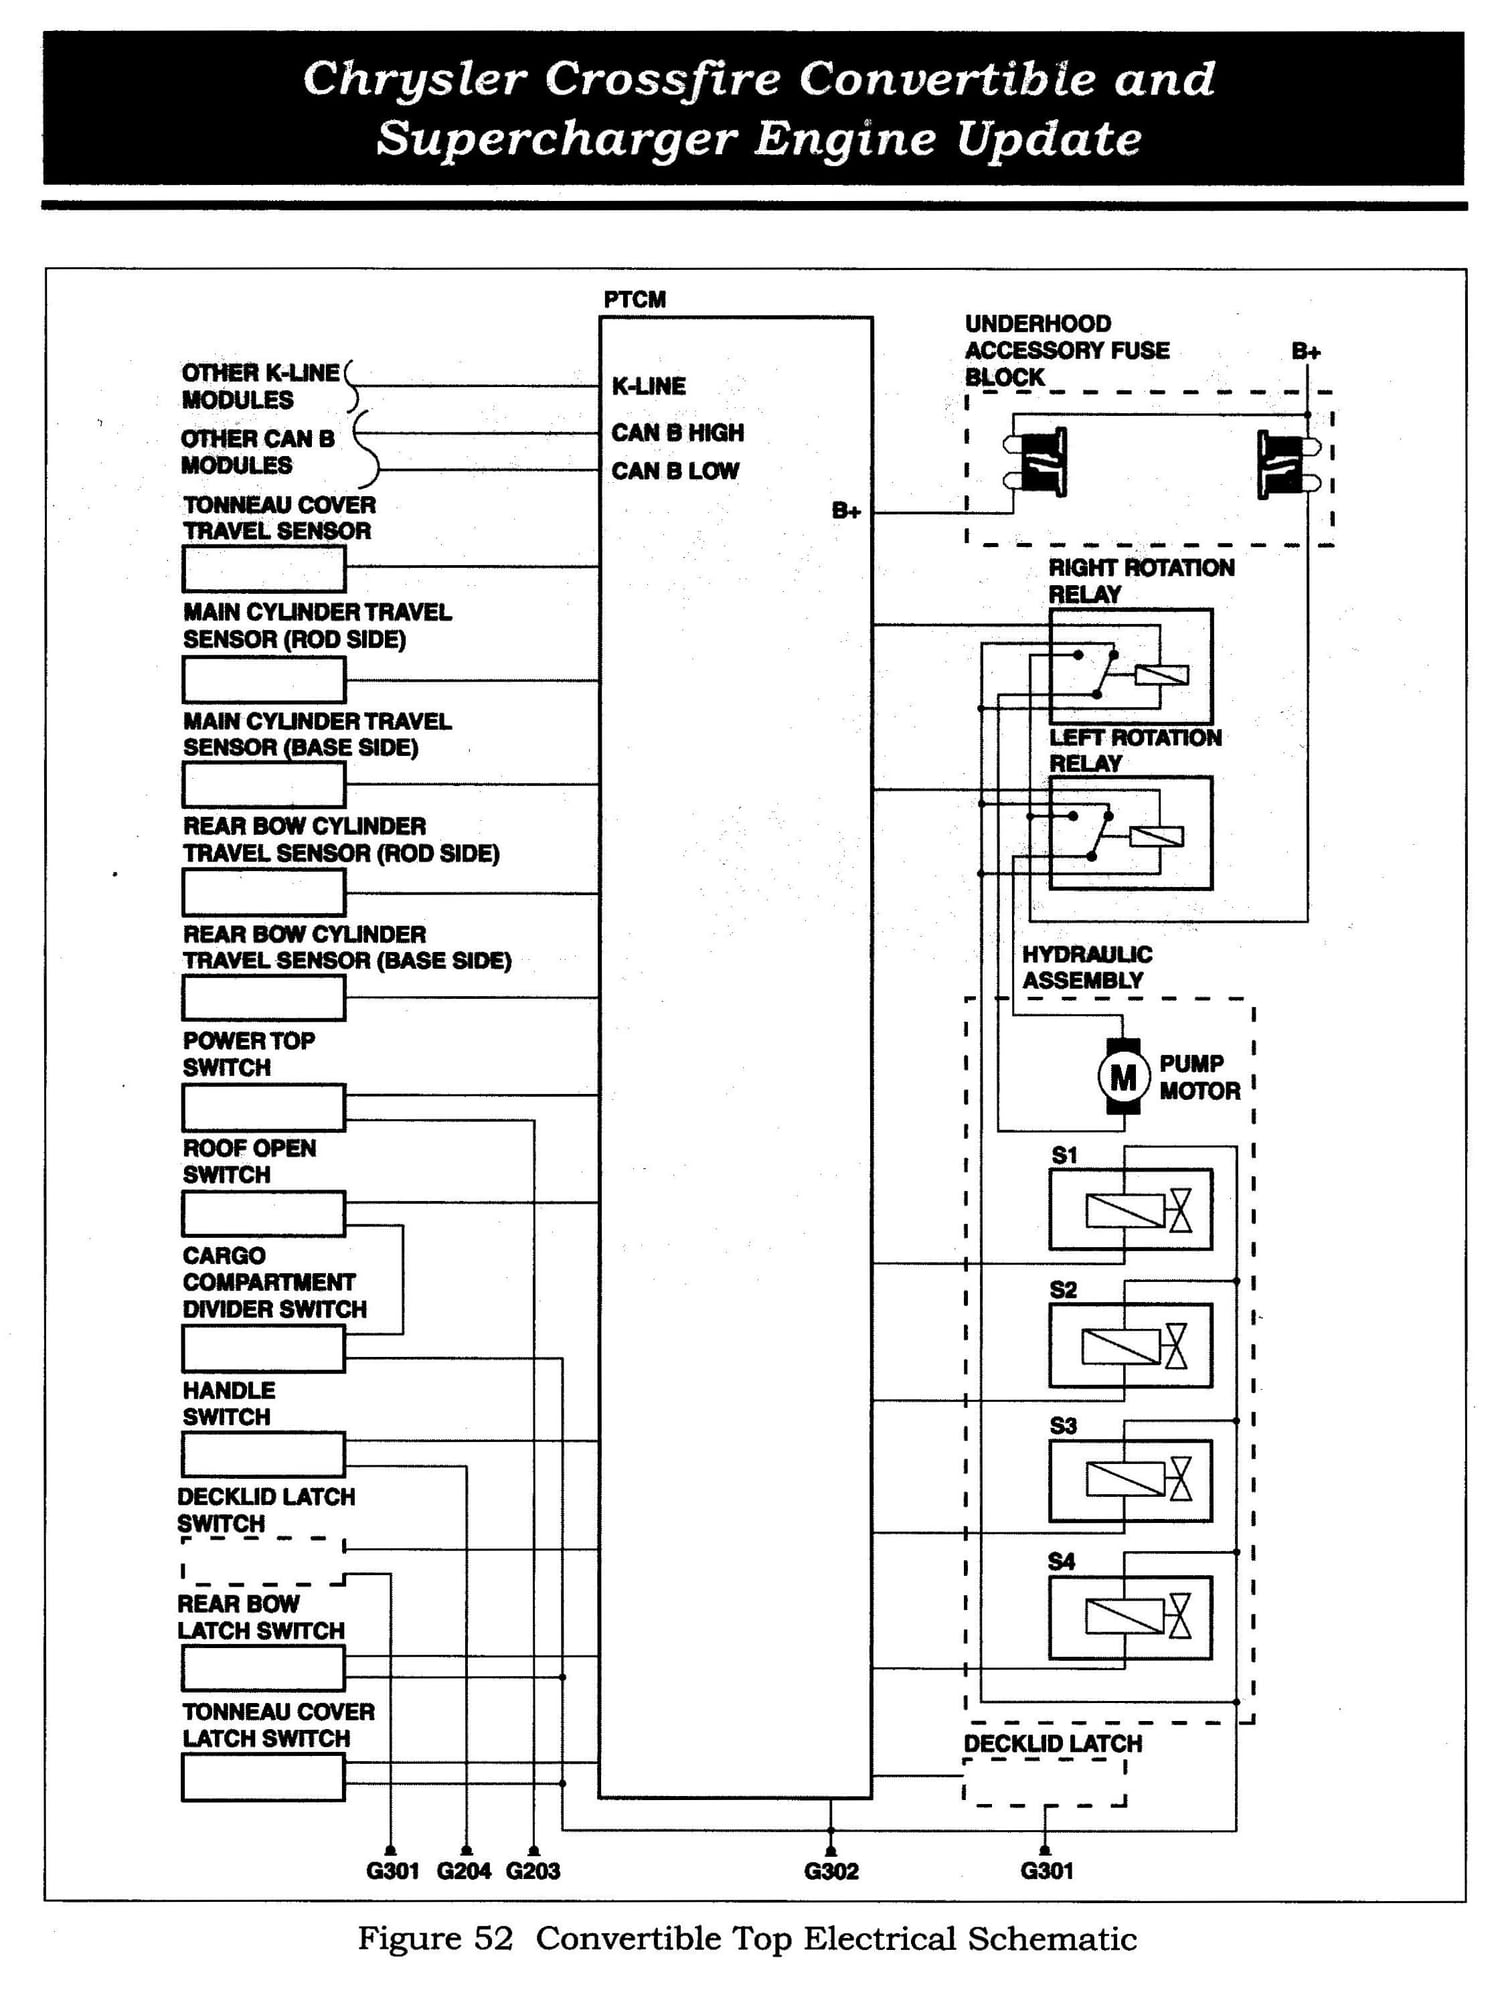 Chrysler Crossfire Radio Wiring Diagram from cimg6.ibsrv.net